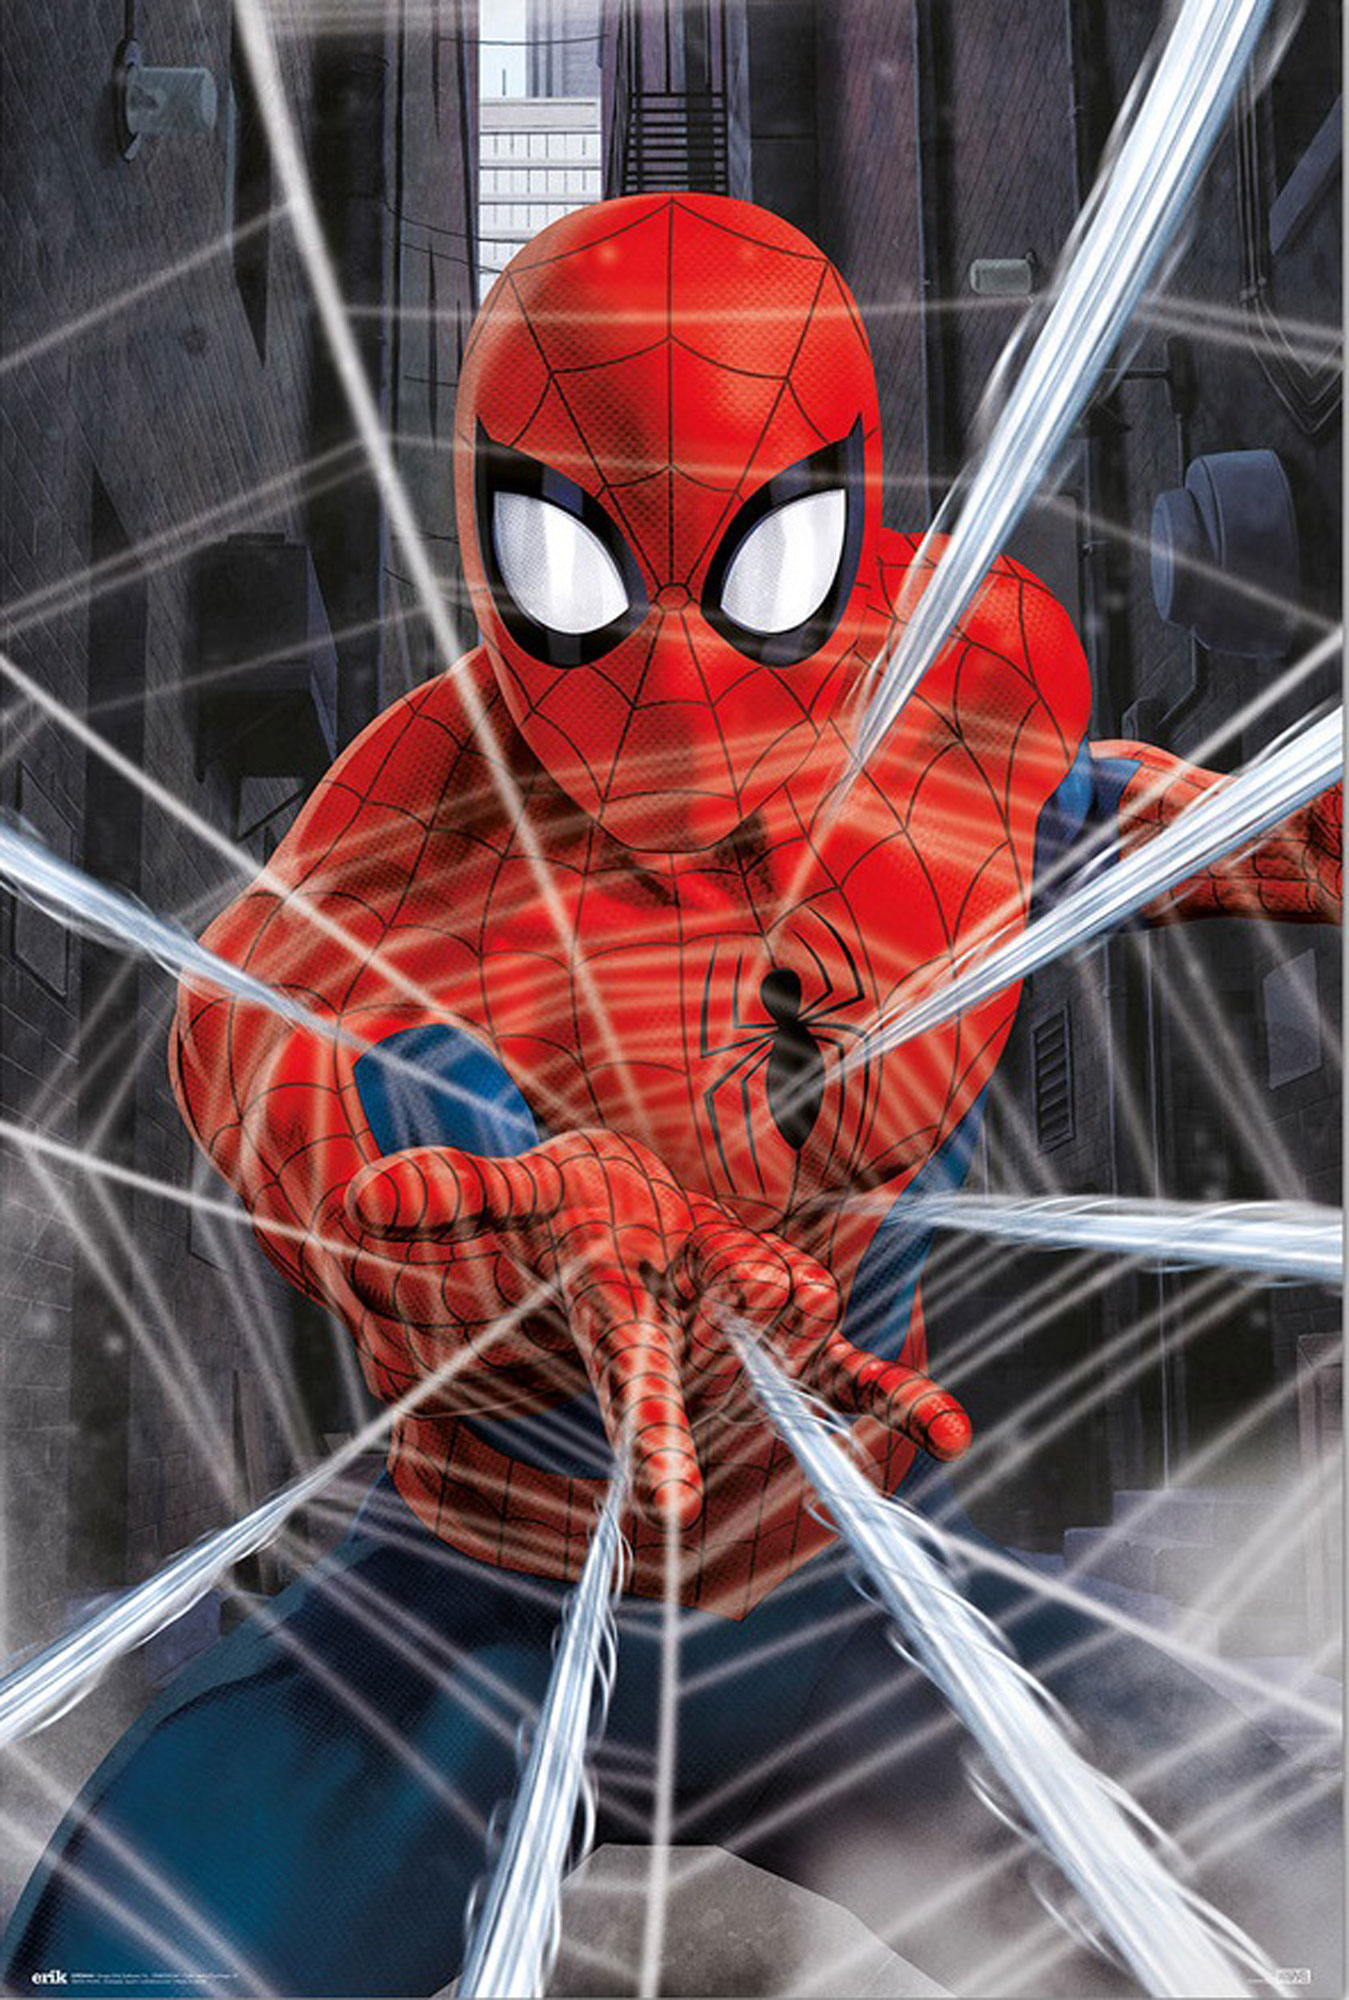 Gotcha - Spider-Man